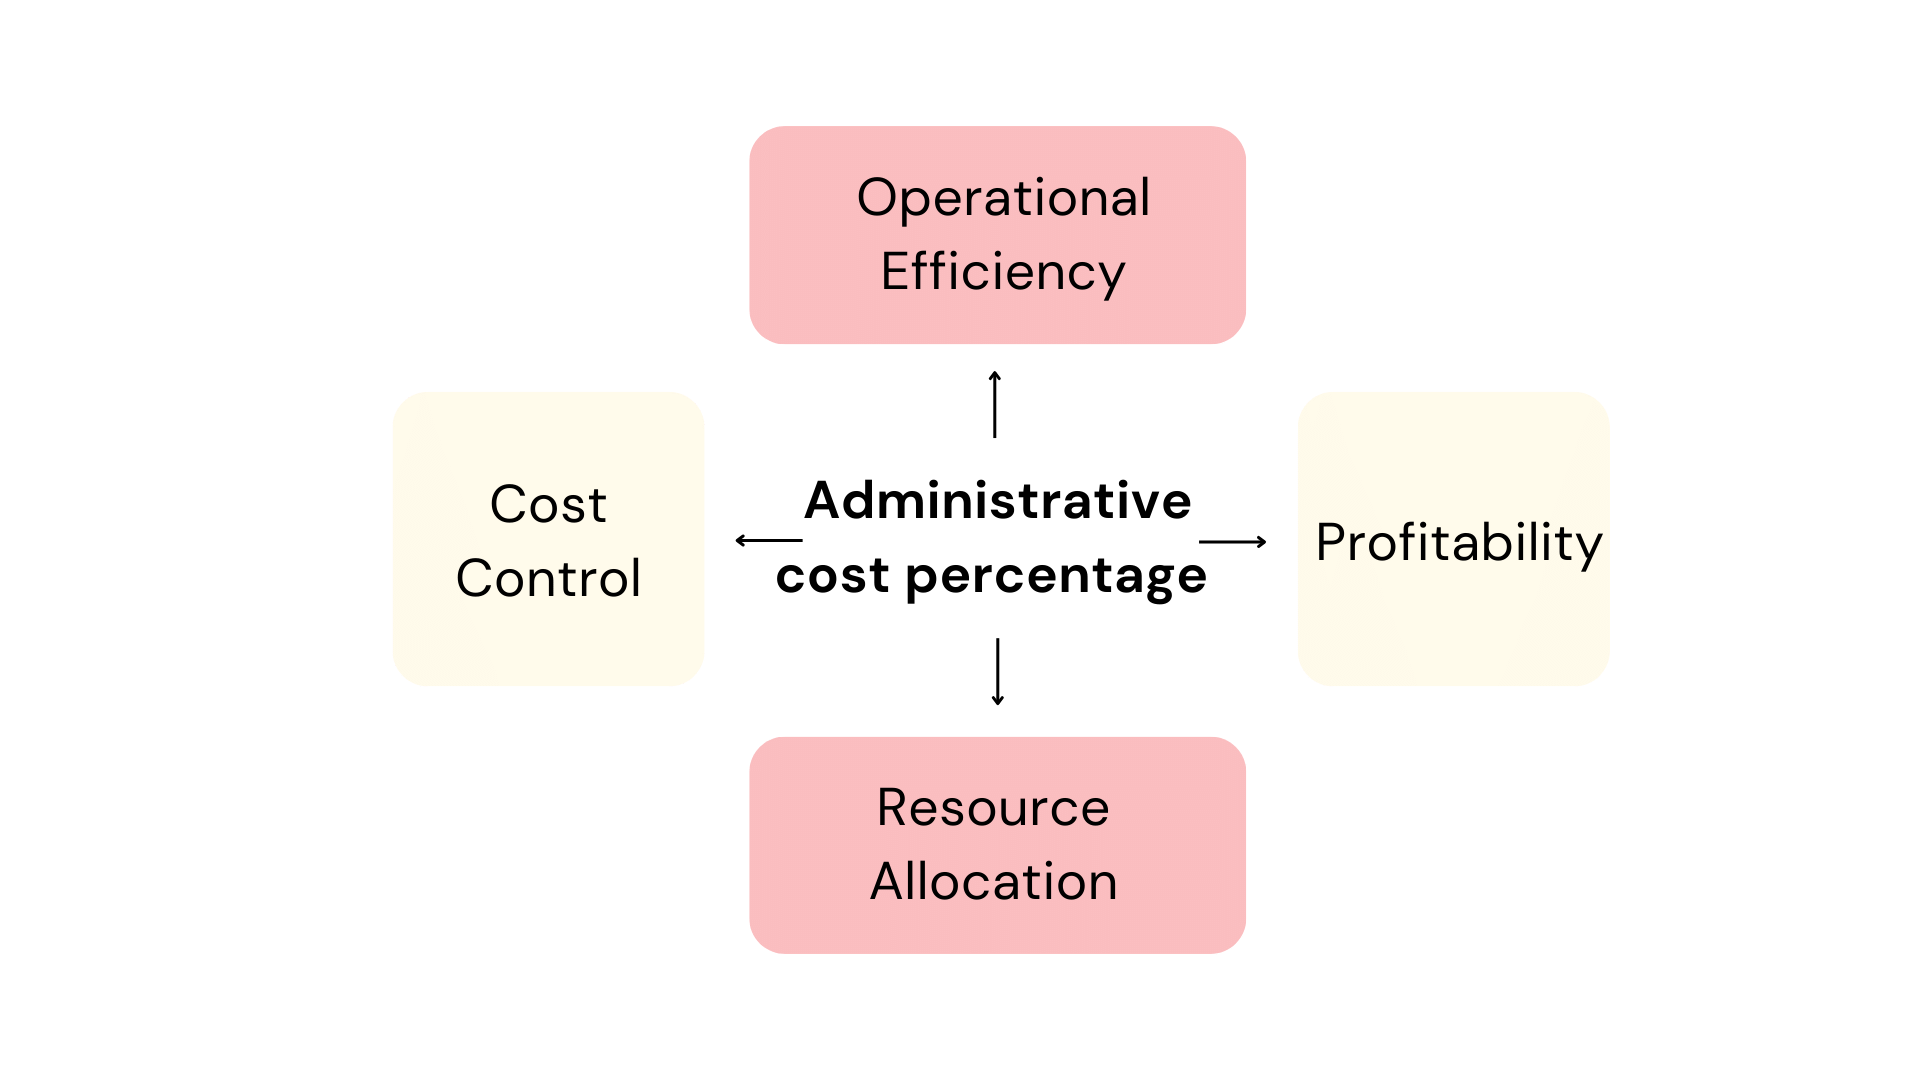 Administrative cost percentage